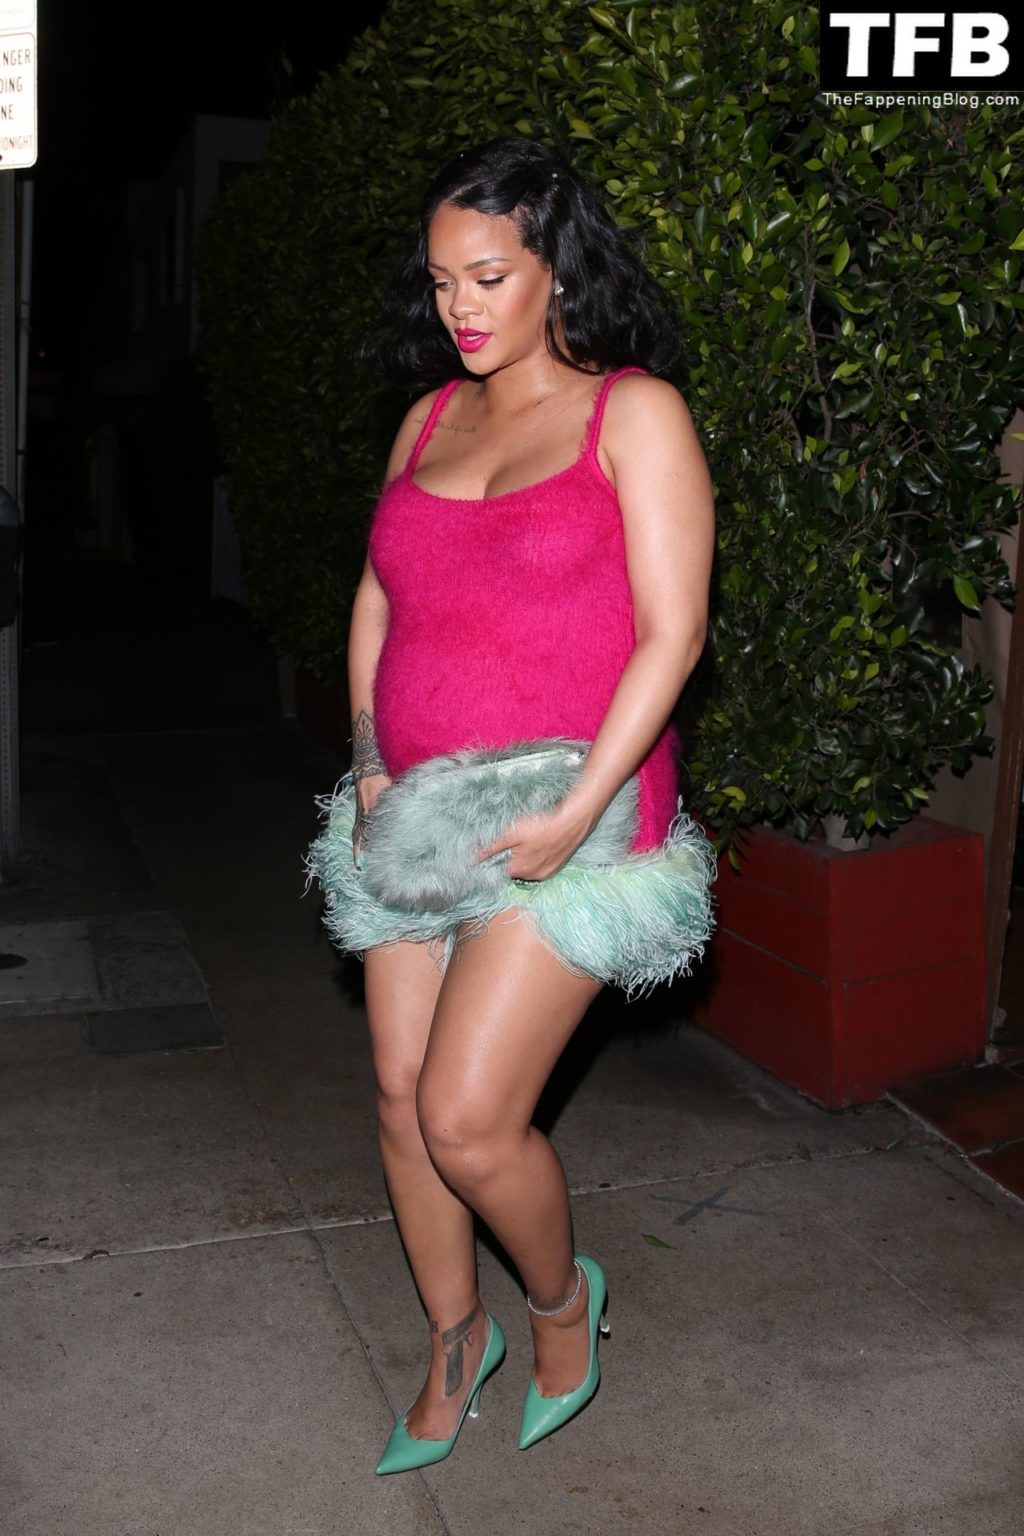 Rihanna Sexy The Fappening Blog 93 1024x1536 - Rihanna Puts Her Baby Bump on Display Grabbing Dinner at Giorgio Baldi (100 Photos)